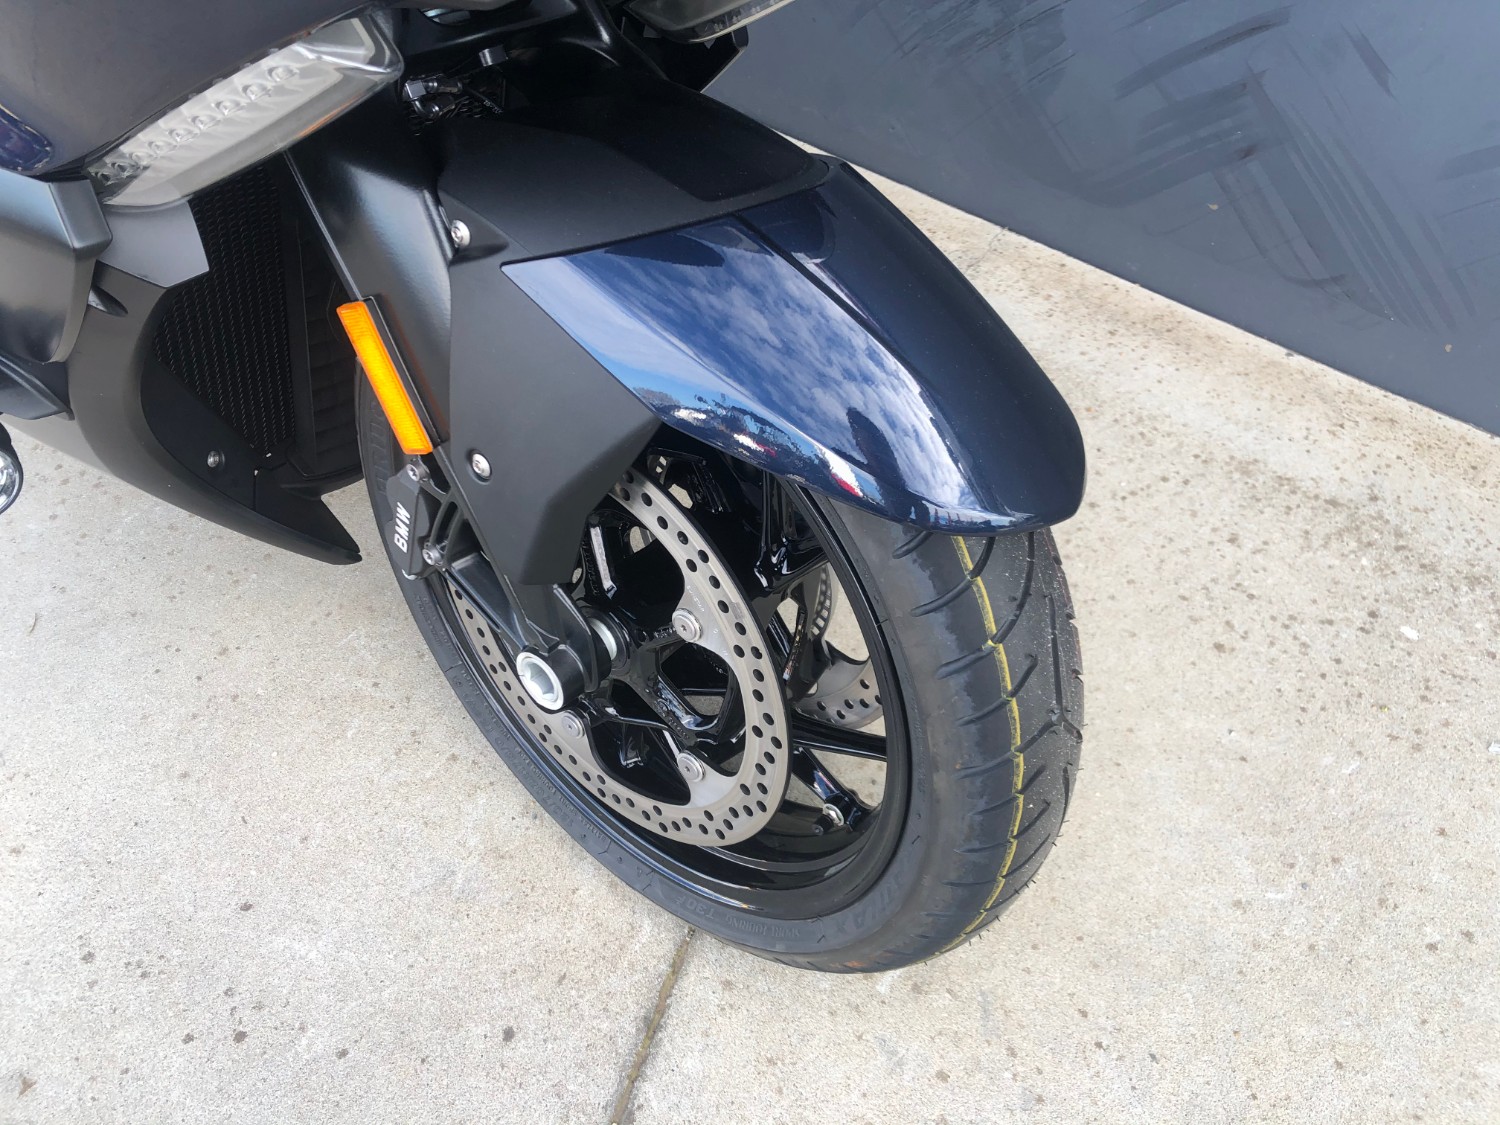 2019 BMW K1600 B Deluxe Motorcycle Image 18